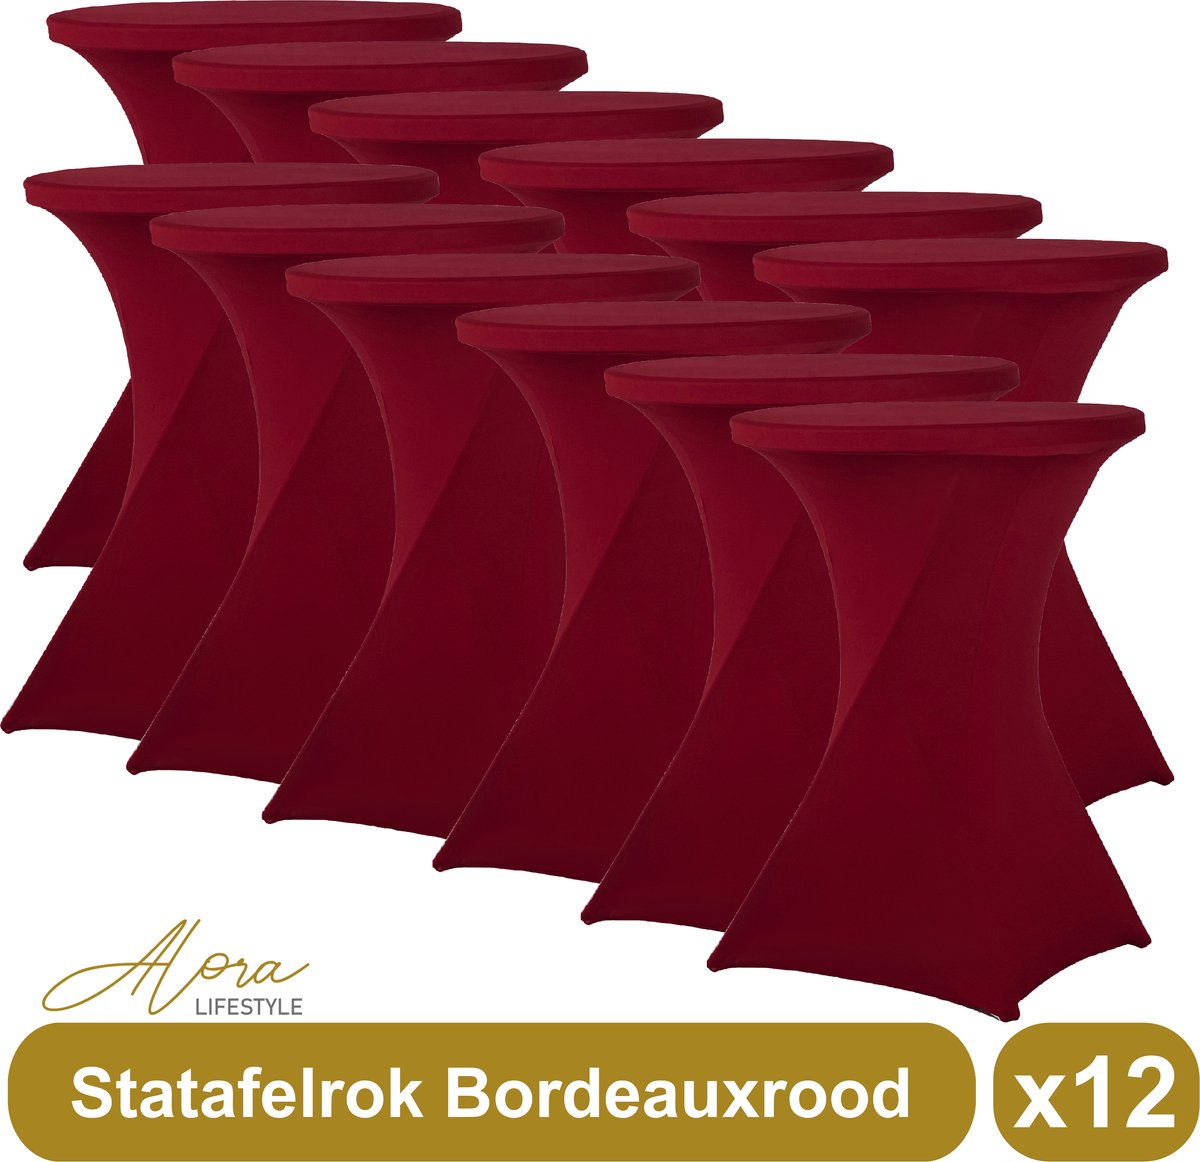 Alora Statafelrok bordeauxrood 80 cm per 12 - Alora tafelrok voor statafel - Statafelhoes - Bruiloft - Cocktailparty - Stretch Rok - Set van 12